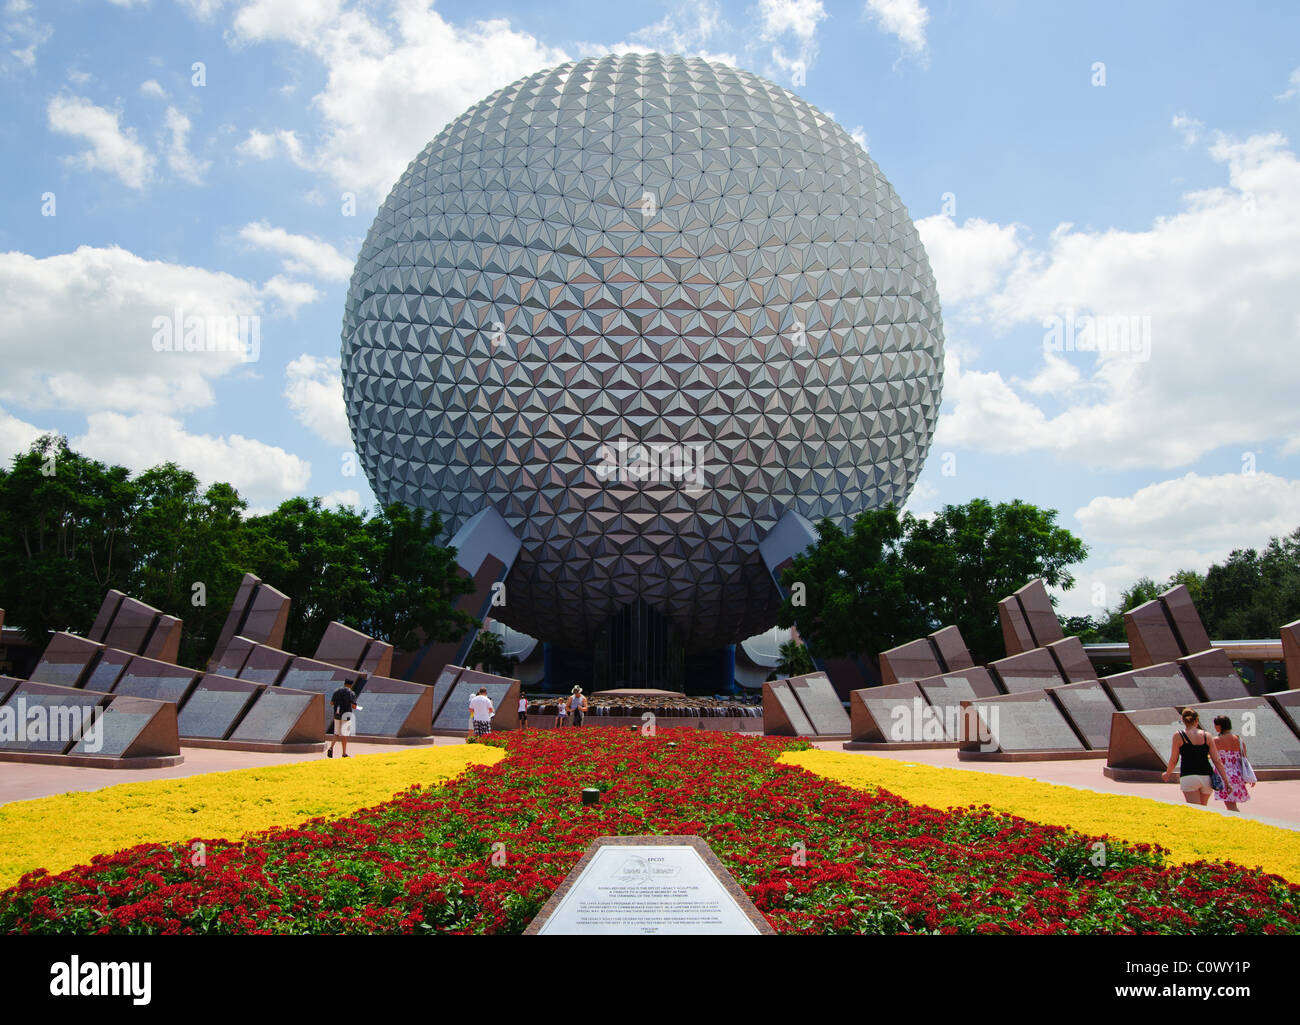 Daytime photo of Spaceship Earth at the Epcot Center, Walt Disney World, Florida Stock Photo